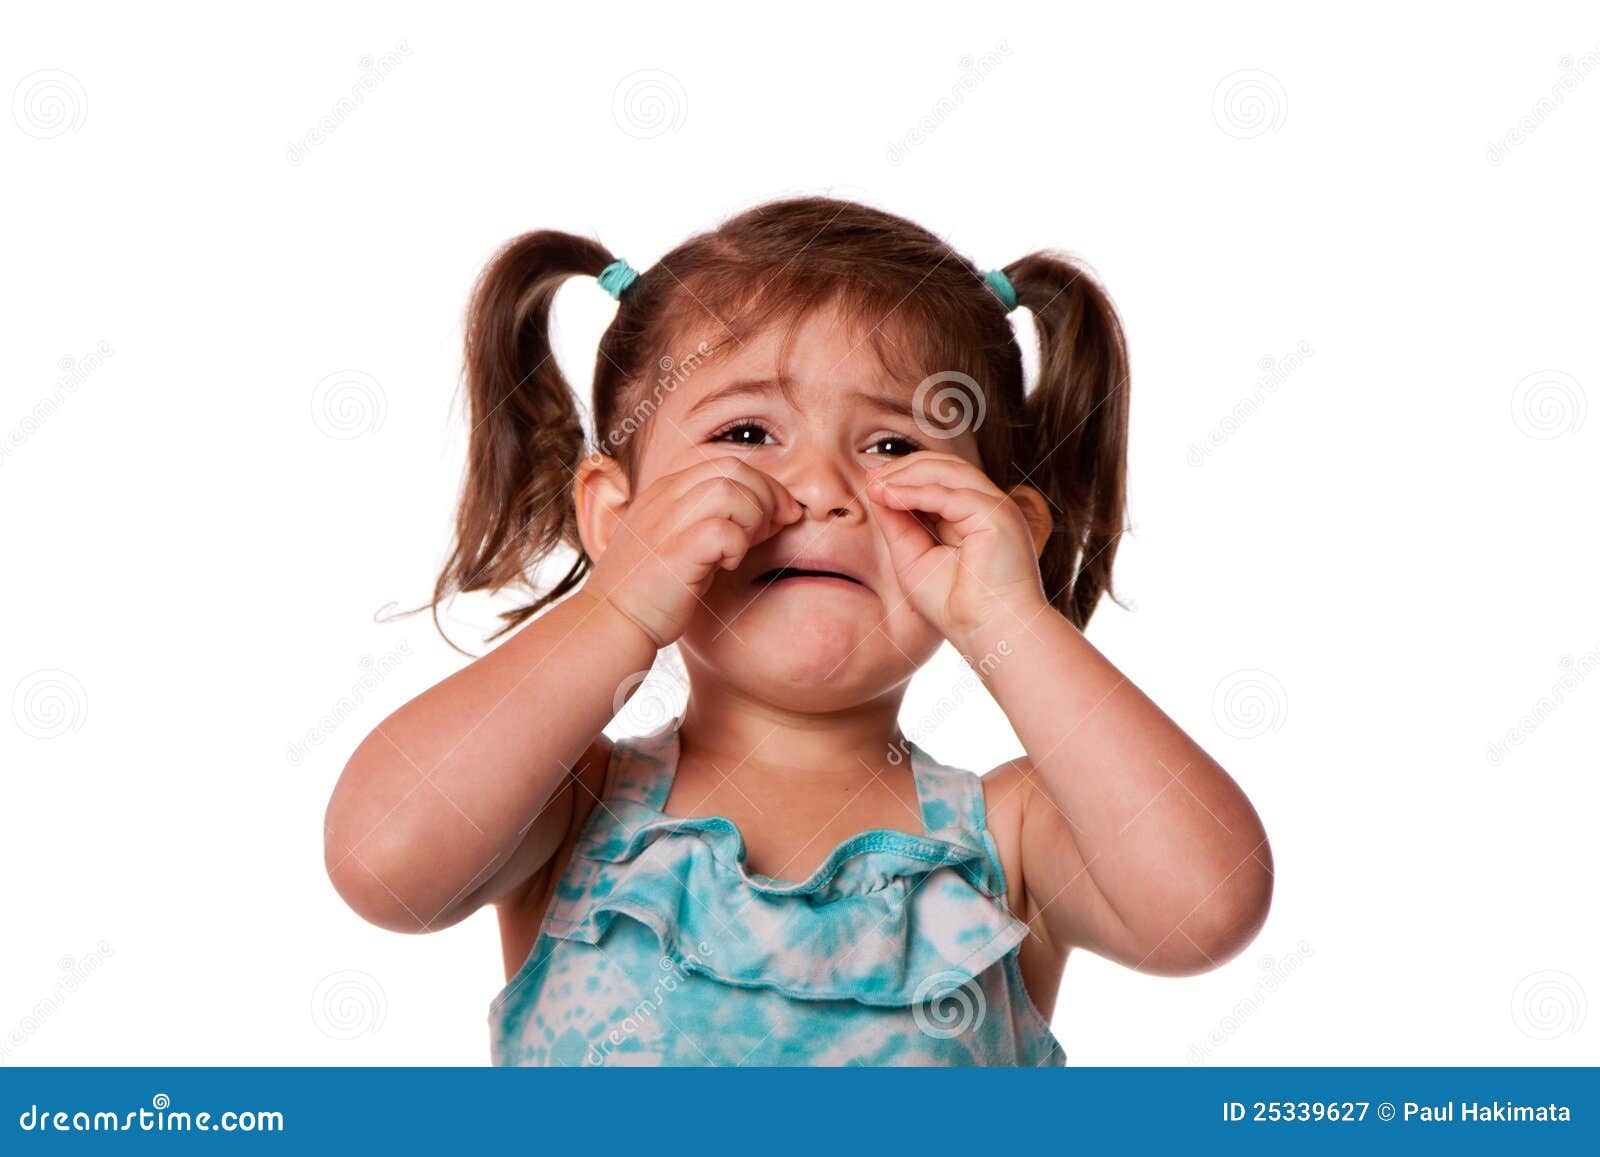 Sad Crying Little Toddler Girl Stock Image - Image of dress, white ...